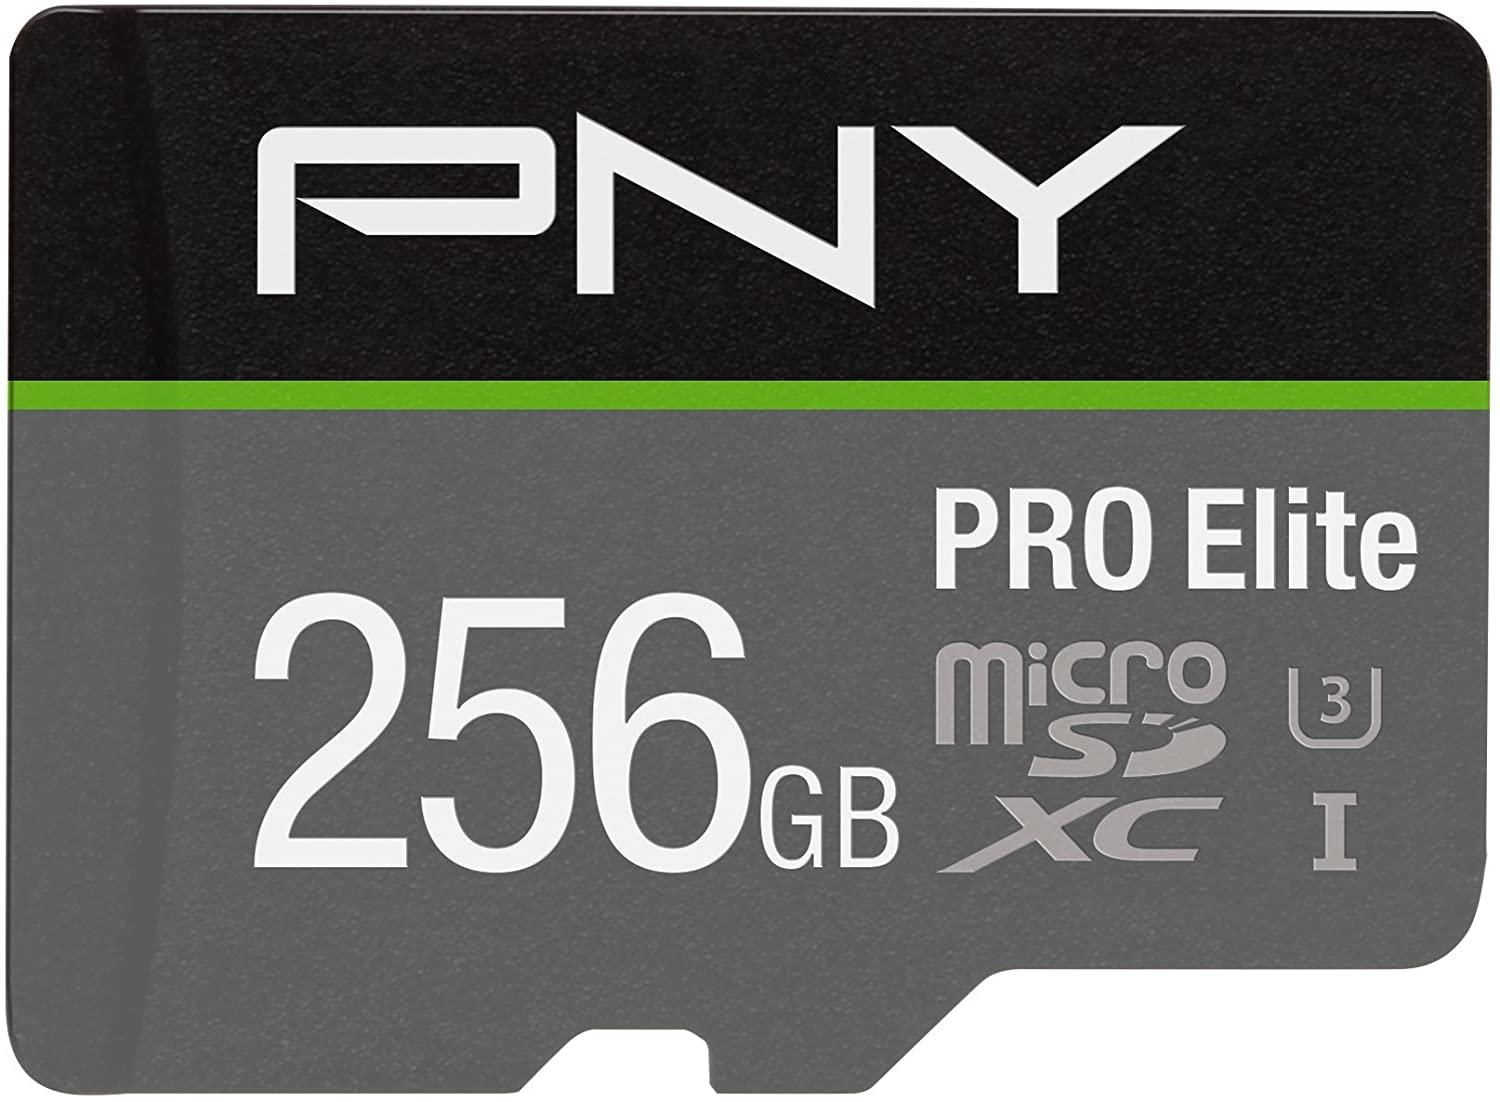 PNY 256GB U3 Pro Elite MicroSDXC Card for $32.99 Shipped